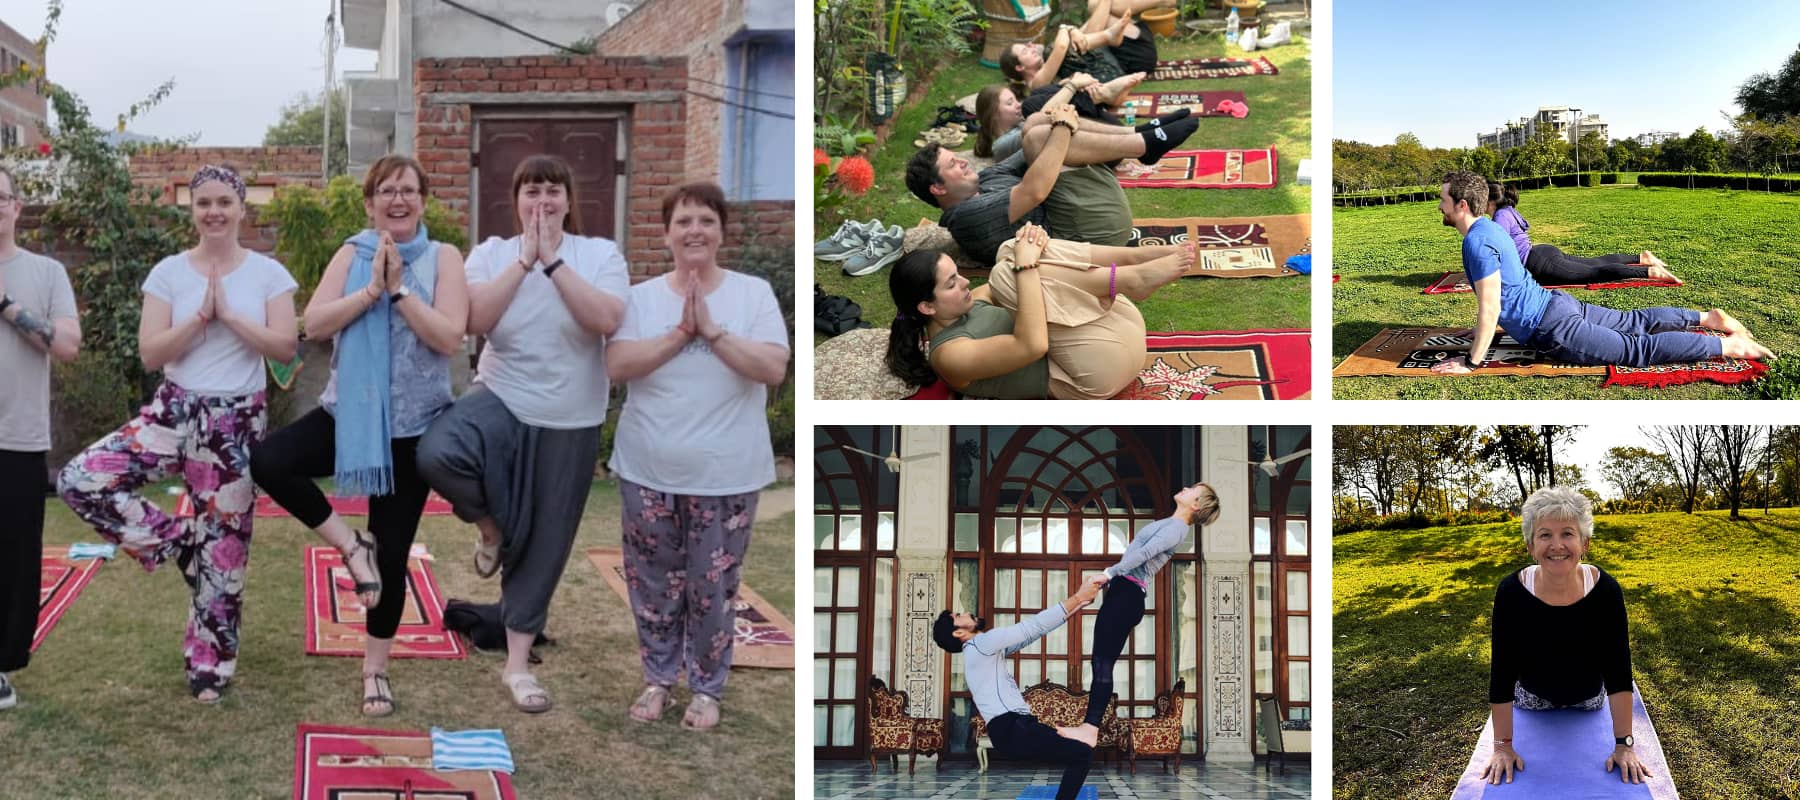 Yoga Tours in India, Yoga Retreat in India, Yoga Teacher Training in India, Yoga Teacher Training Courses in India